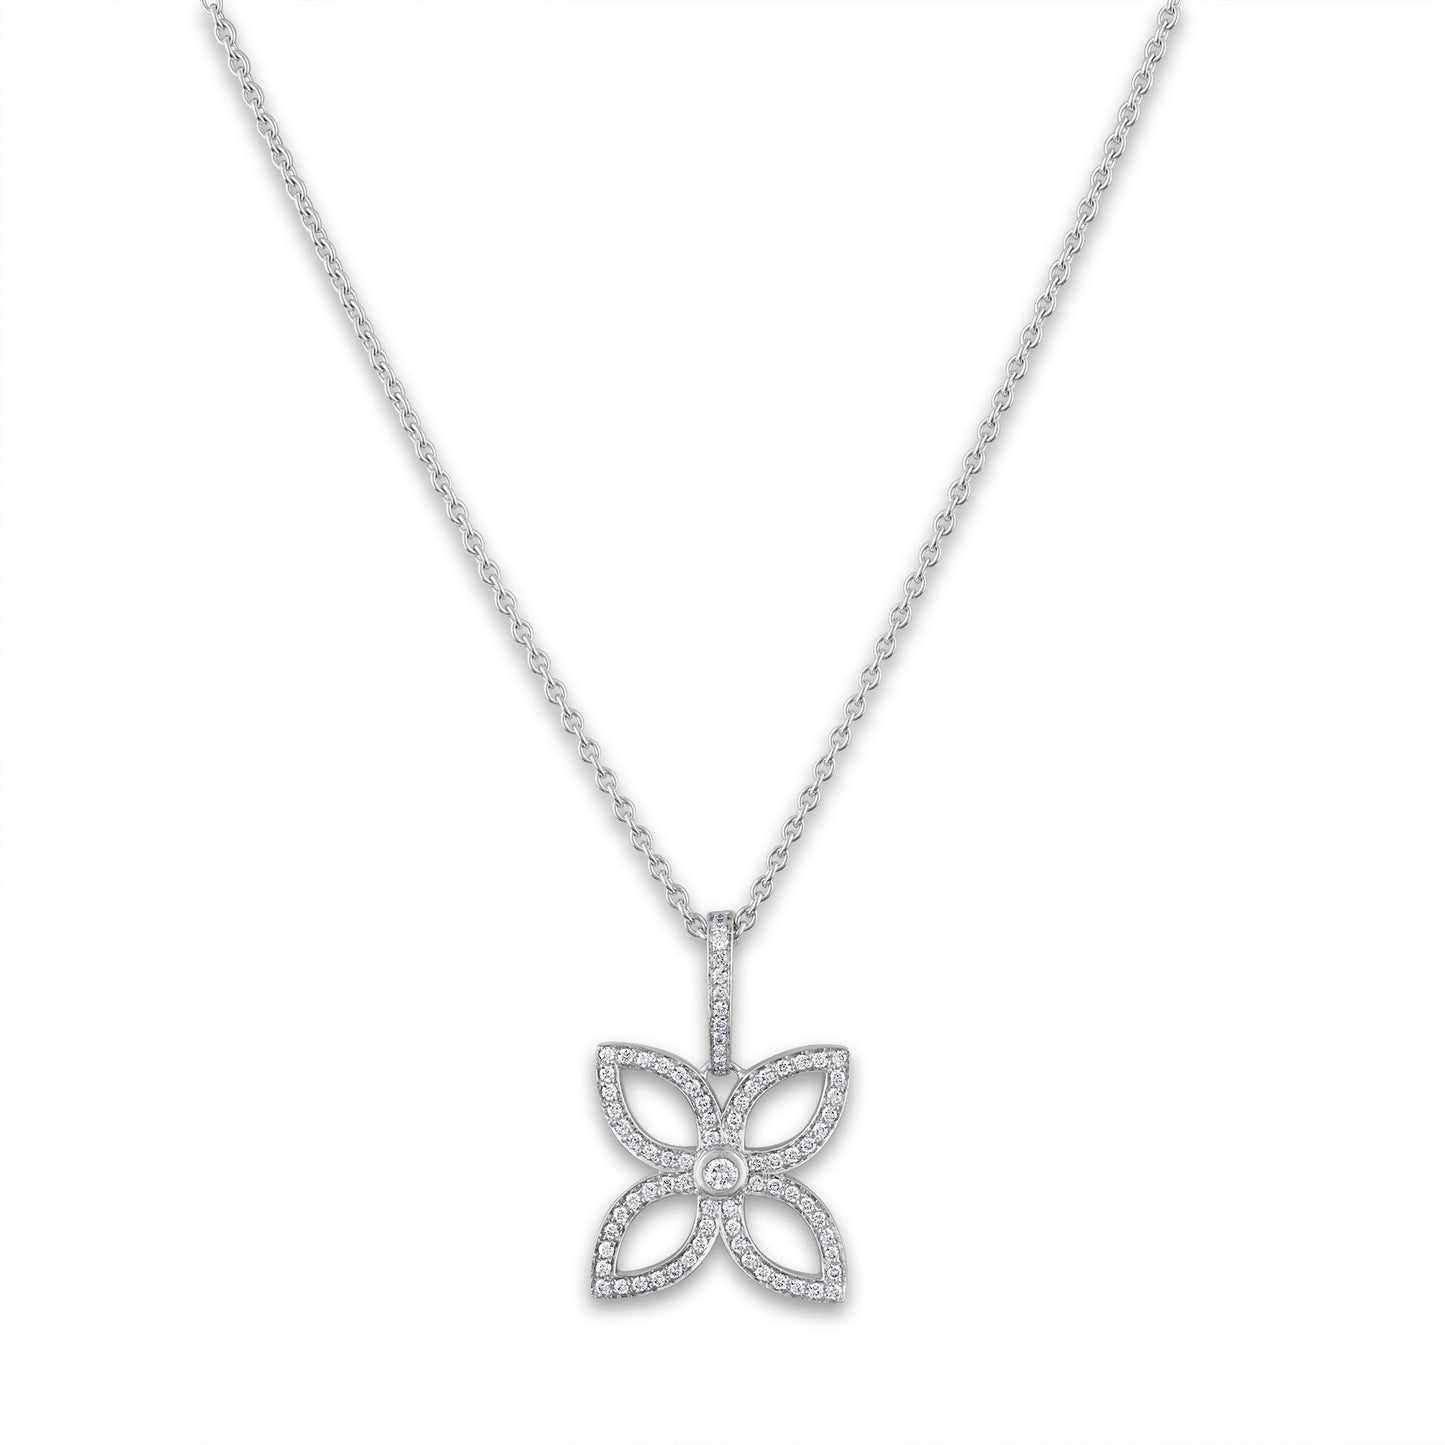 Louis Vuitton 18K White Gold Flower Diamond Necklace Length: 18"